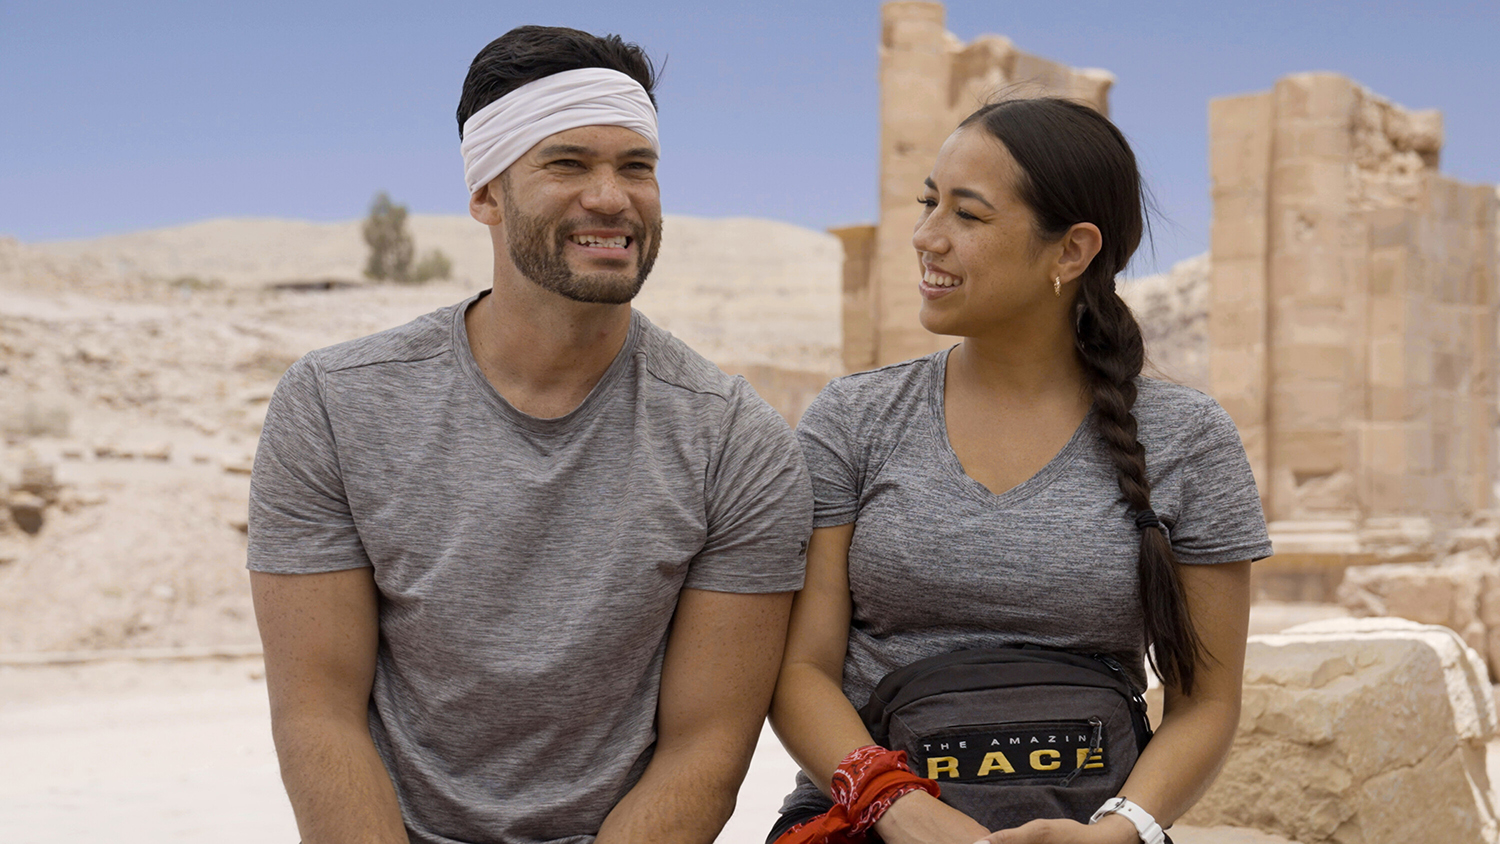 Luis Colon and Michelle Burgos discuss The Amazing Race Season 34 Episode 5 in Jordan.